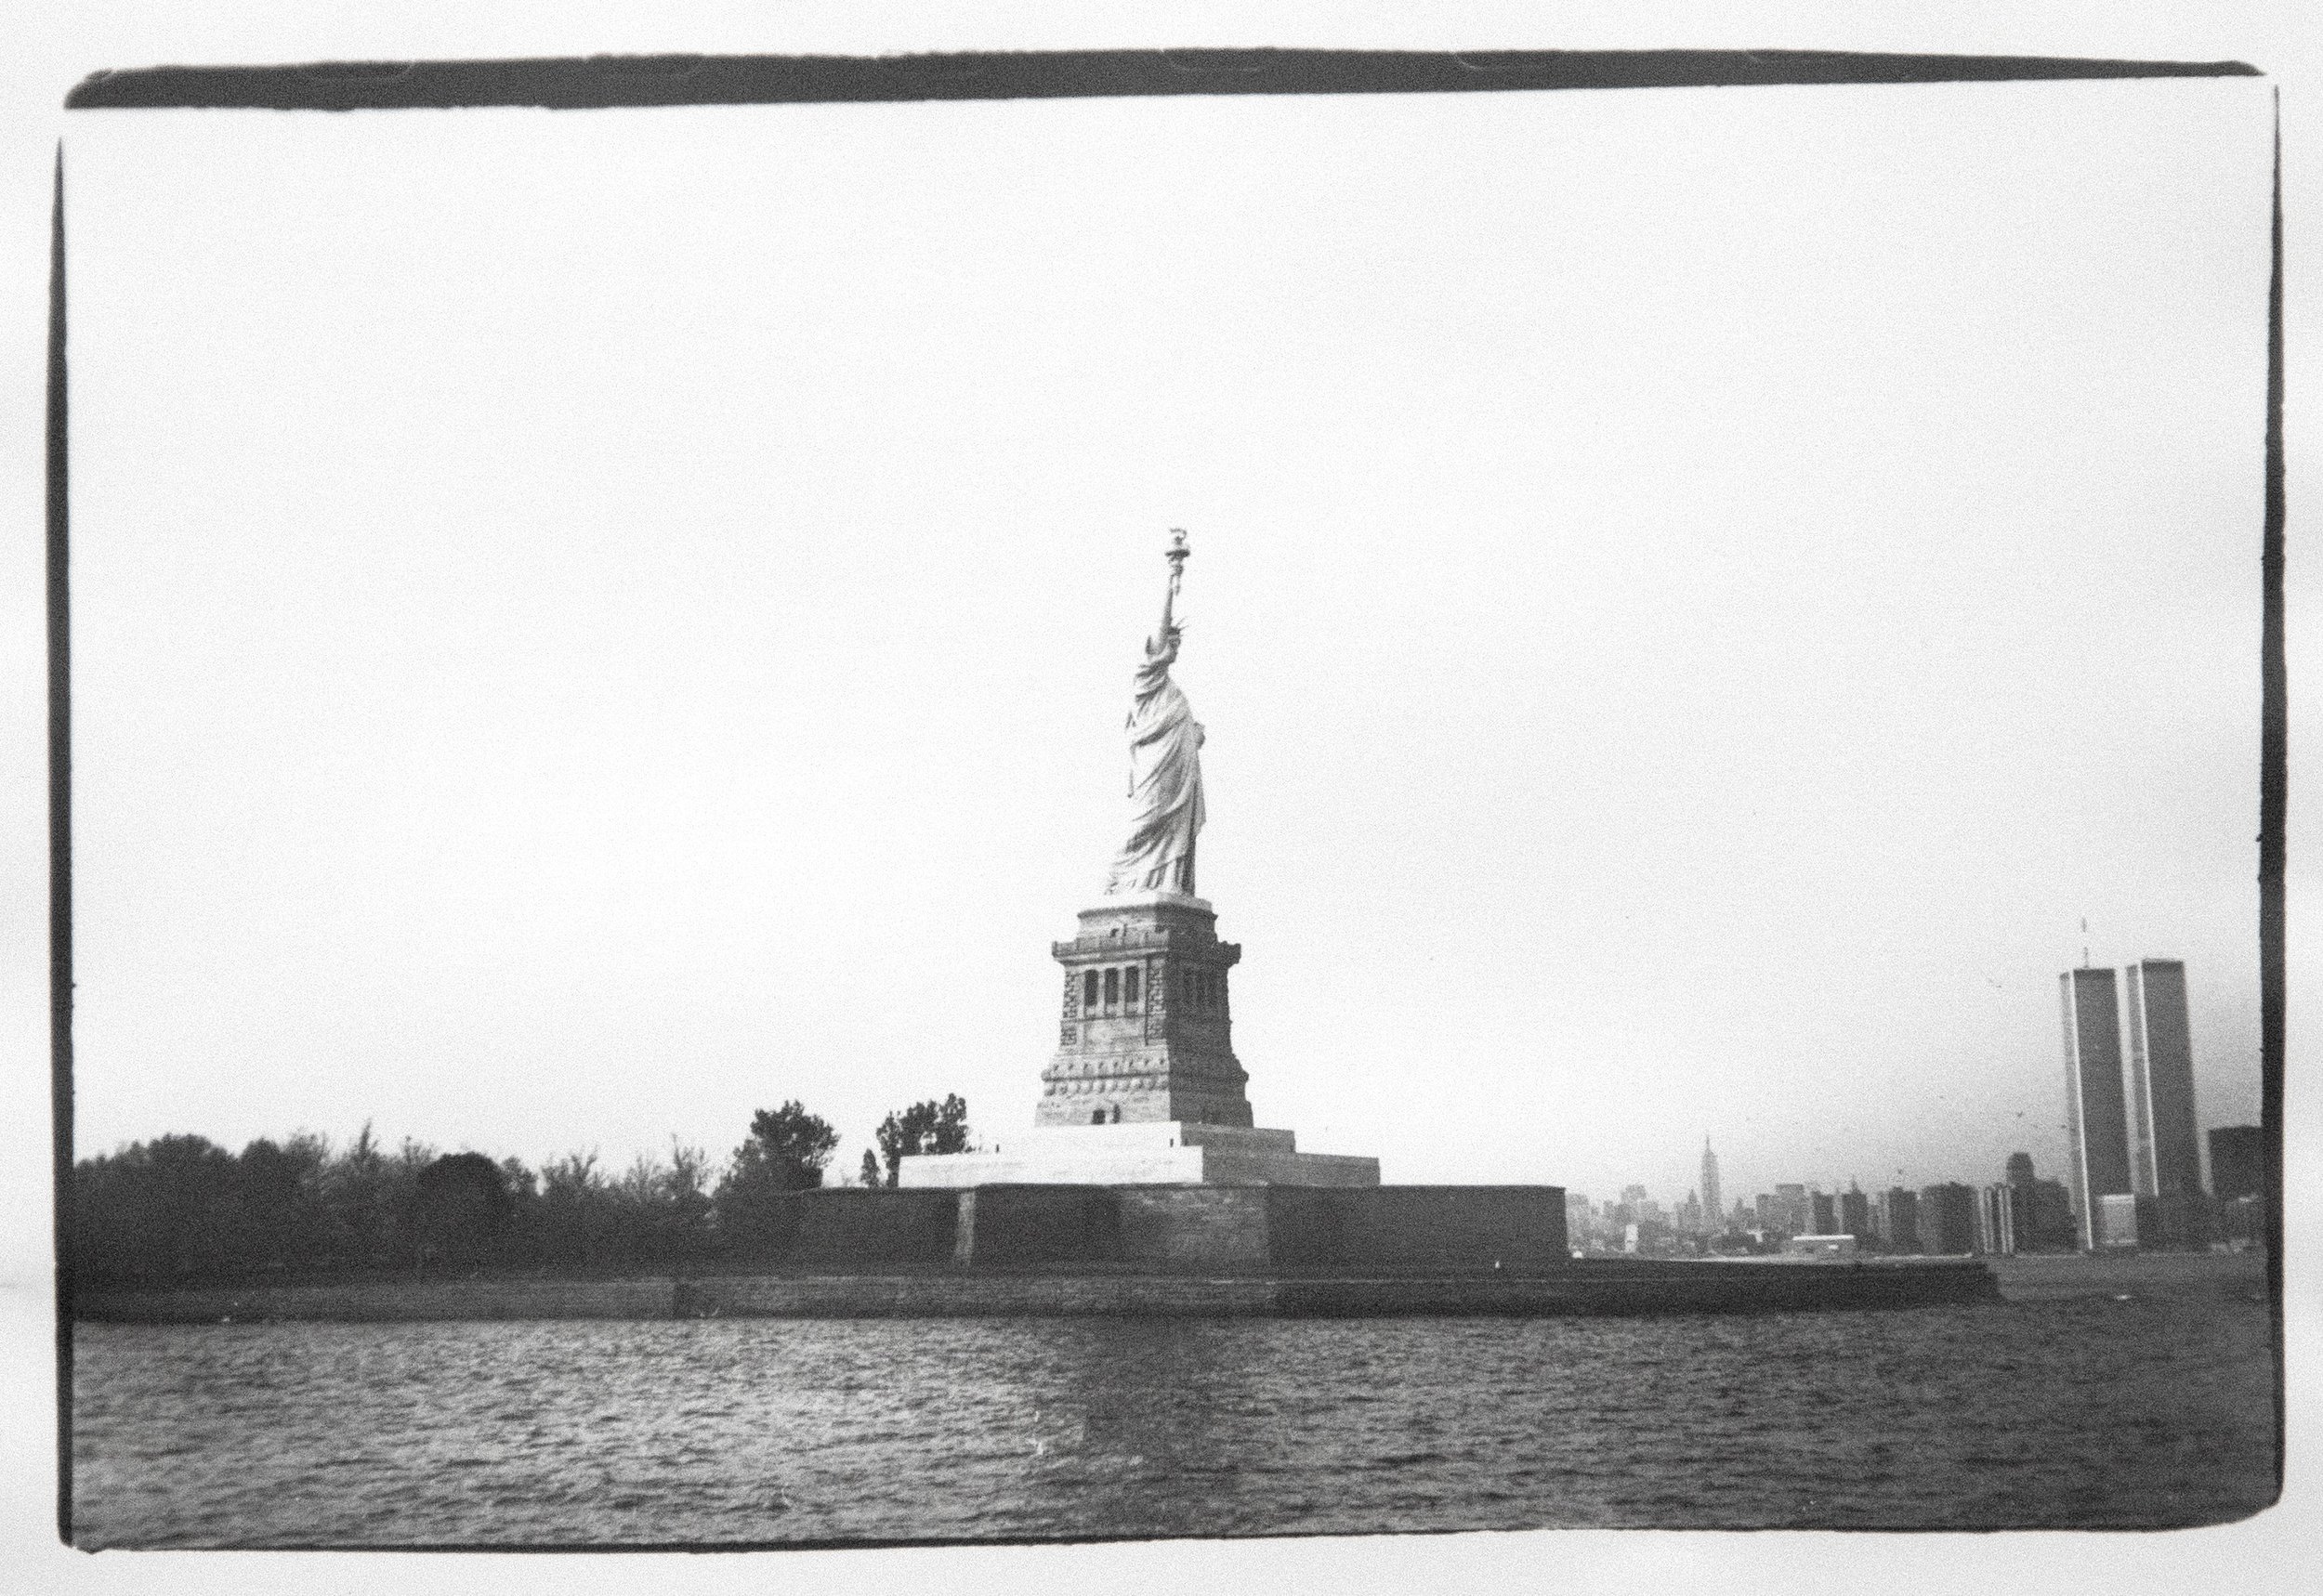 A043013 Statue of Liberty.jpg